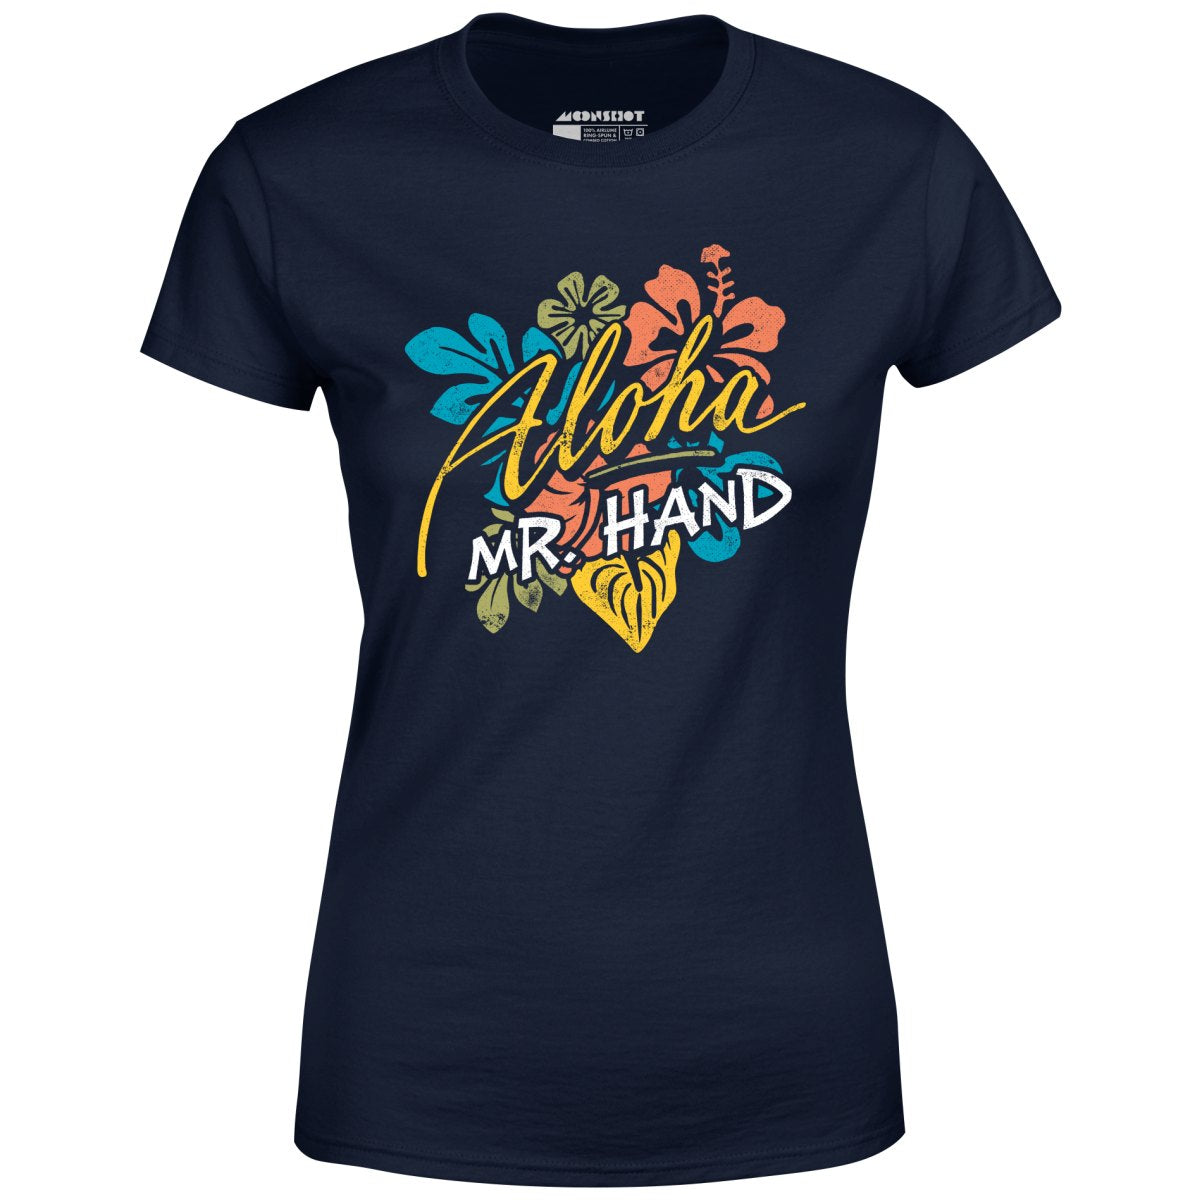 Aloha Mr. Hand - Women's T-Shirt